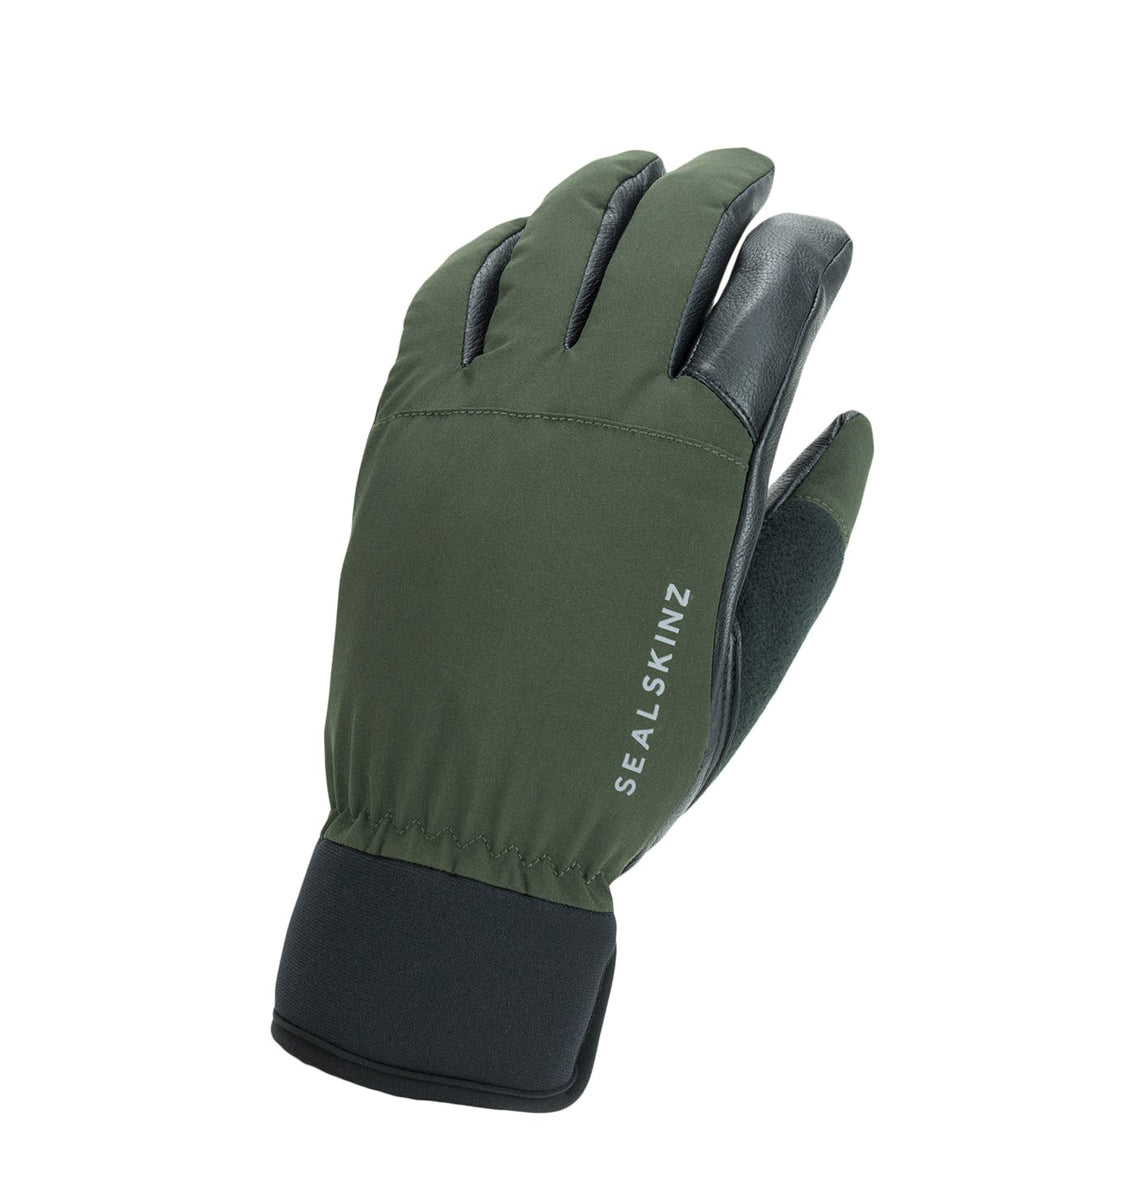 SealSkinz Shooting Glove Leather 100% Waterproof & Breathable 